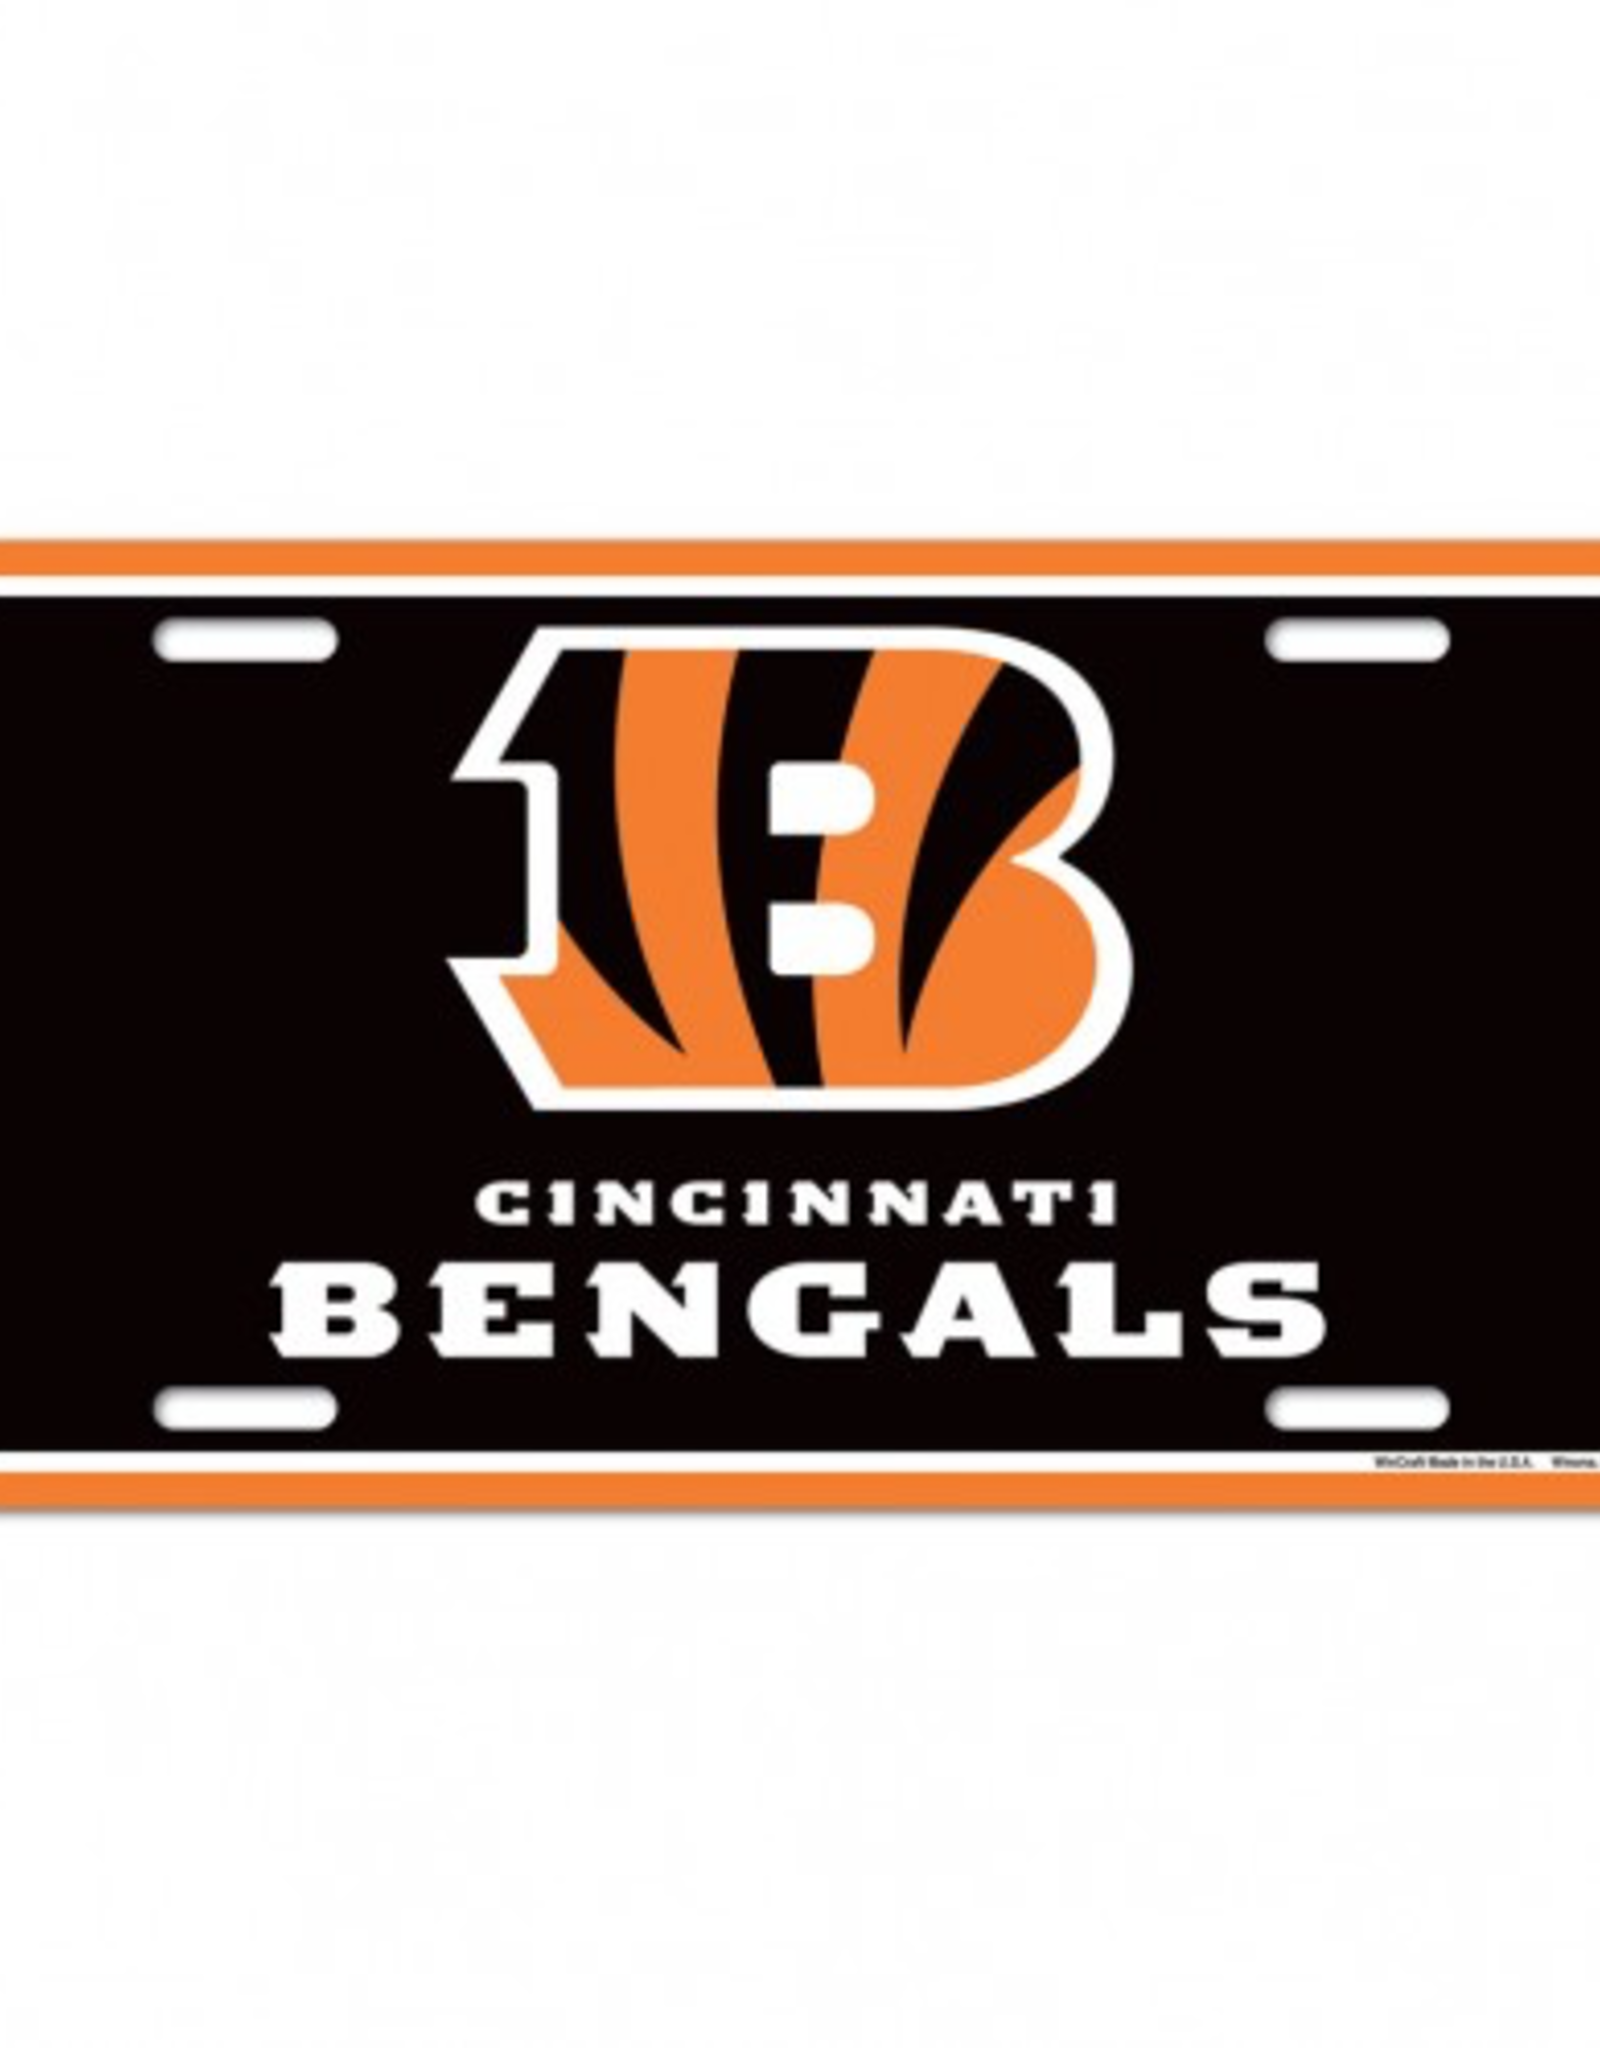 WINCRAFT Cincinnati Bengals License Plate